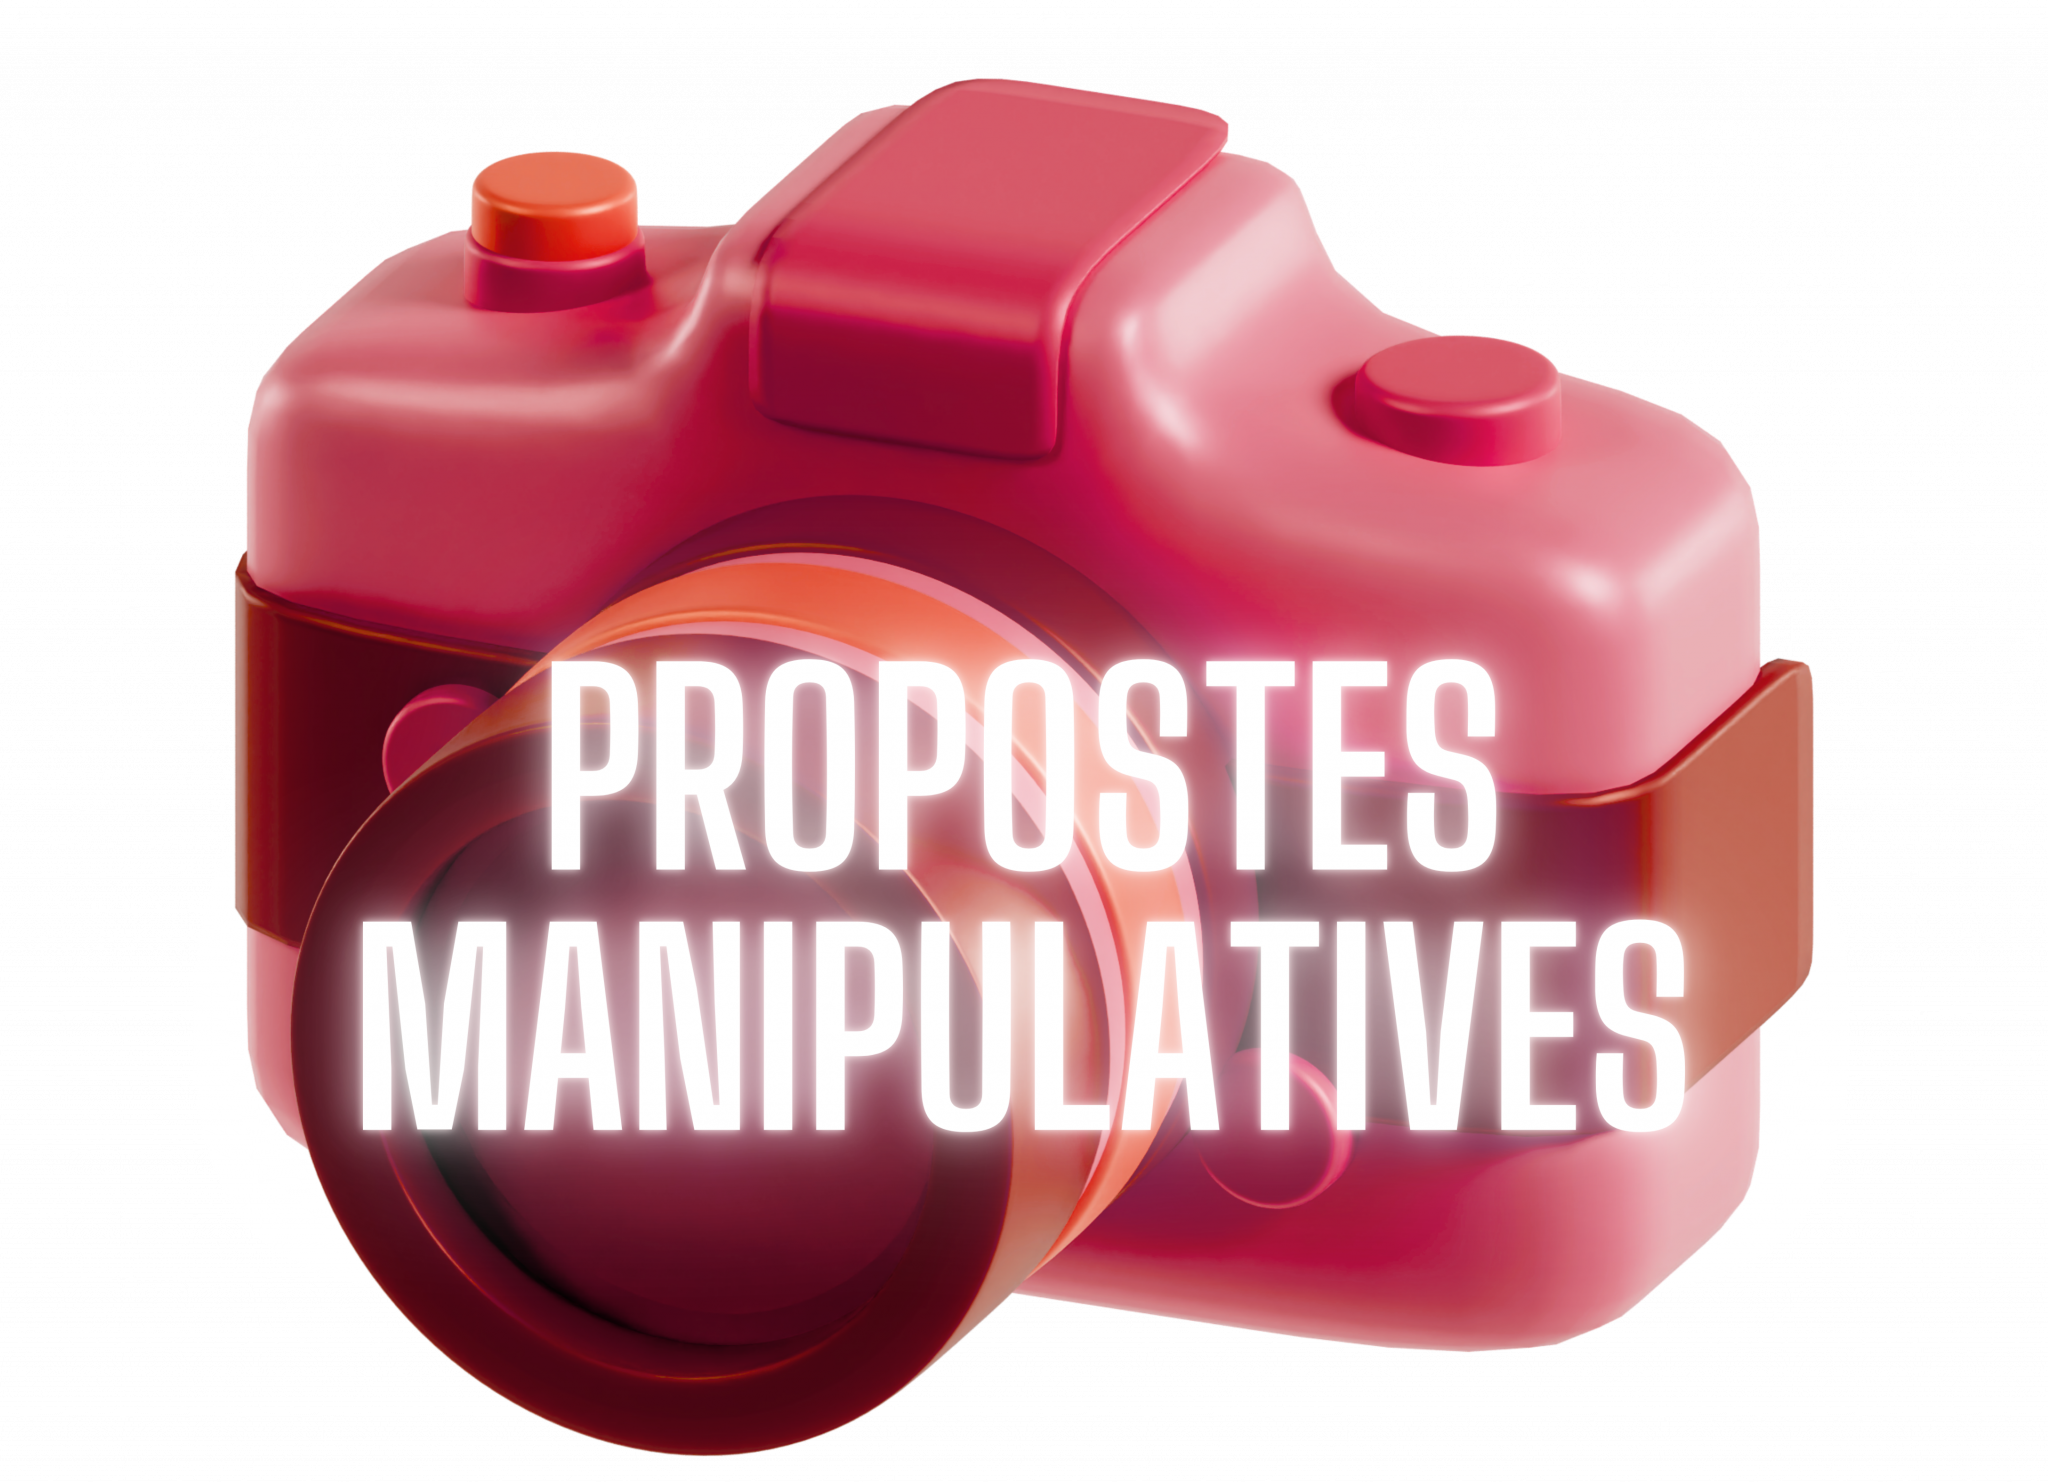 propostes manipulatives